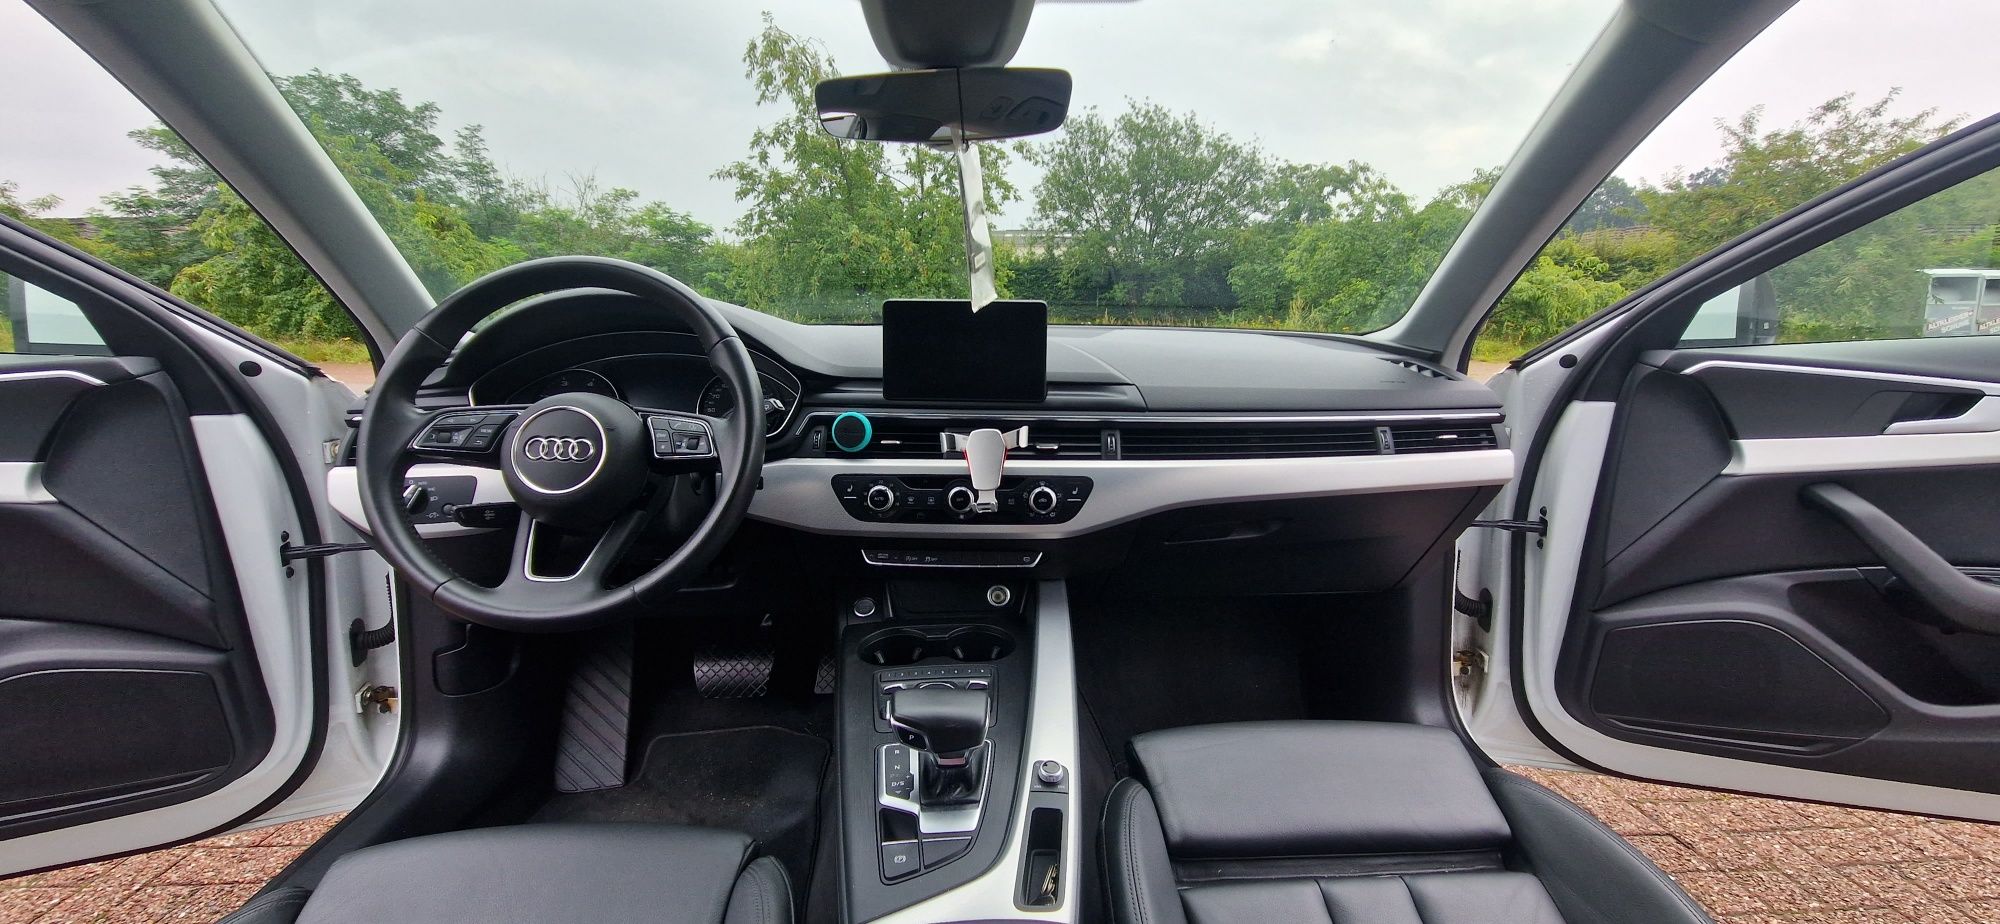 Audi a4B9 s-line 2.0 TDI 190 km 2018 rok